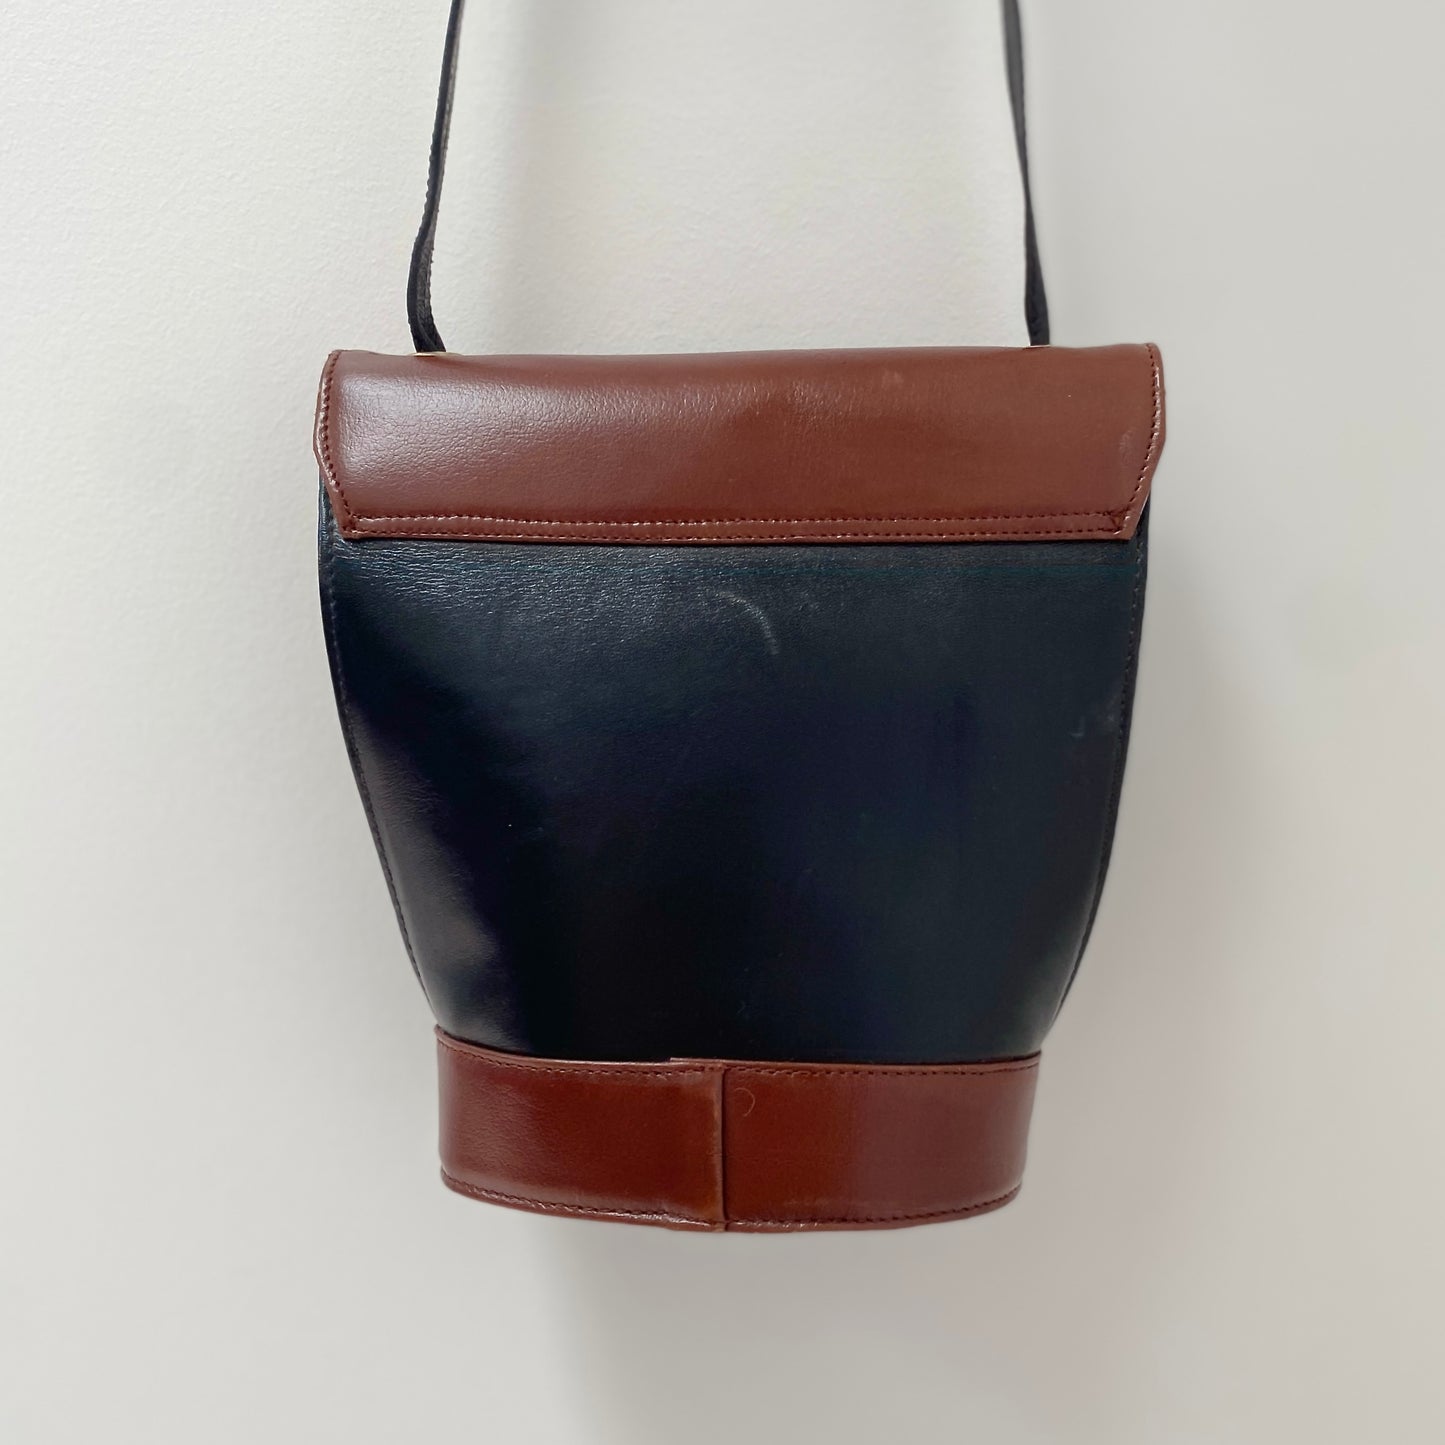 Black & Tan Leather Bag